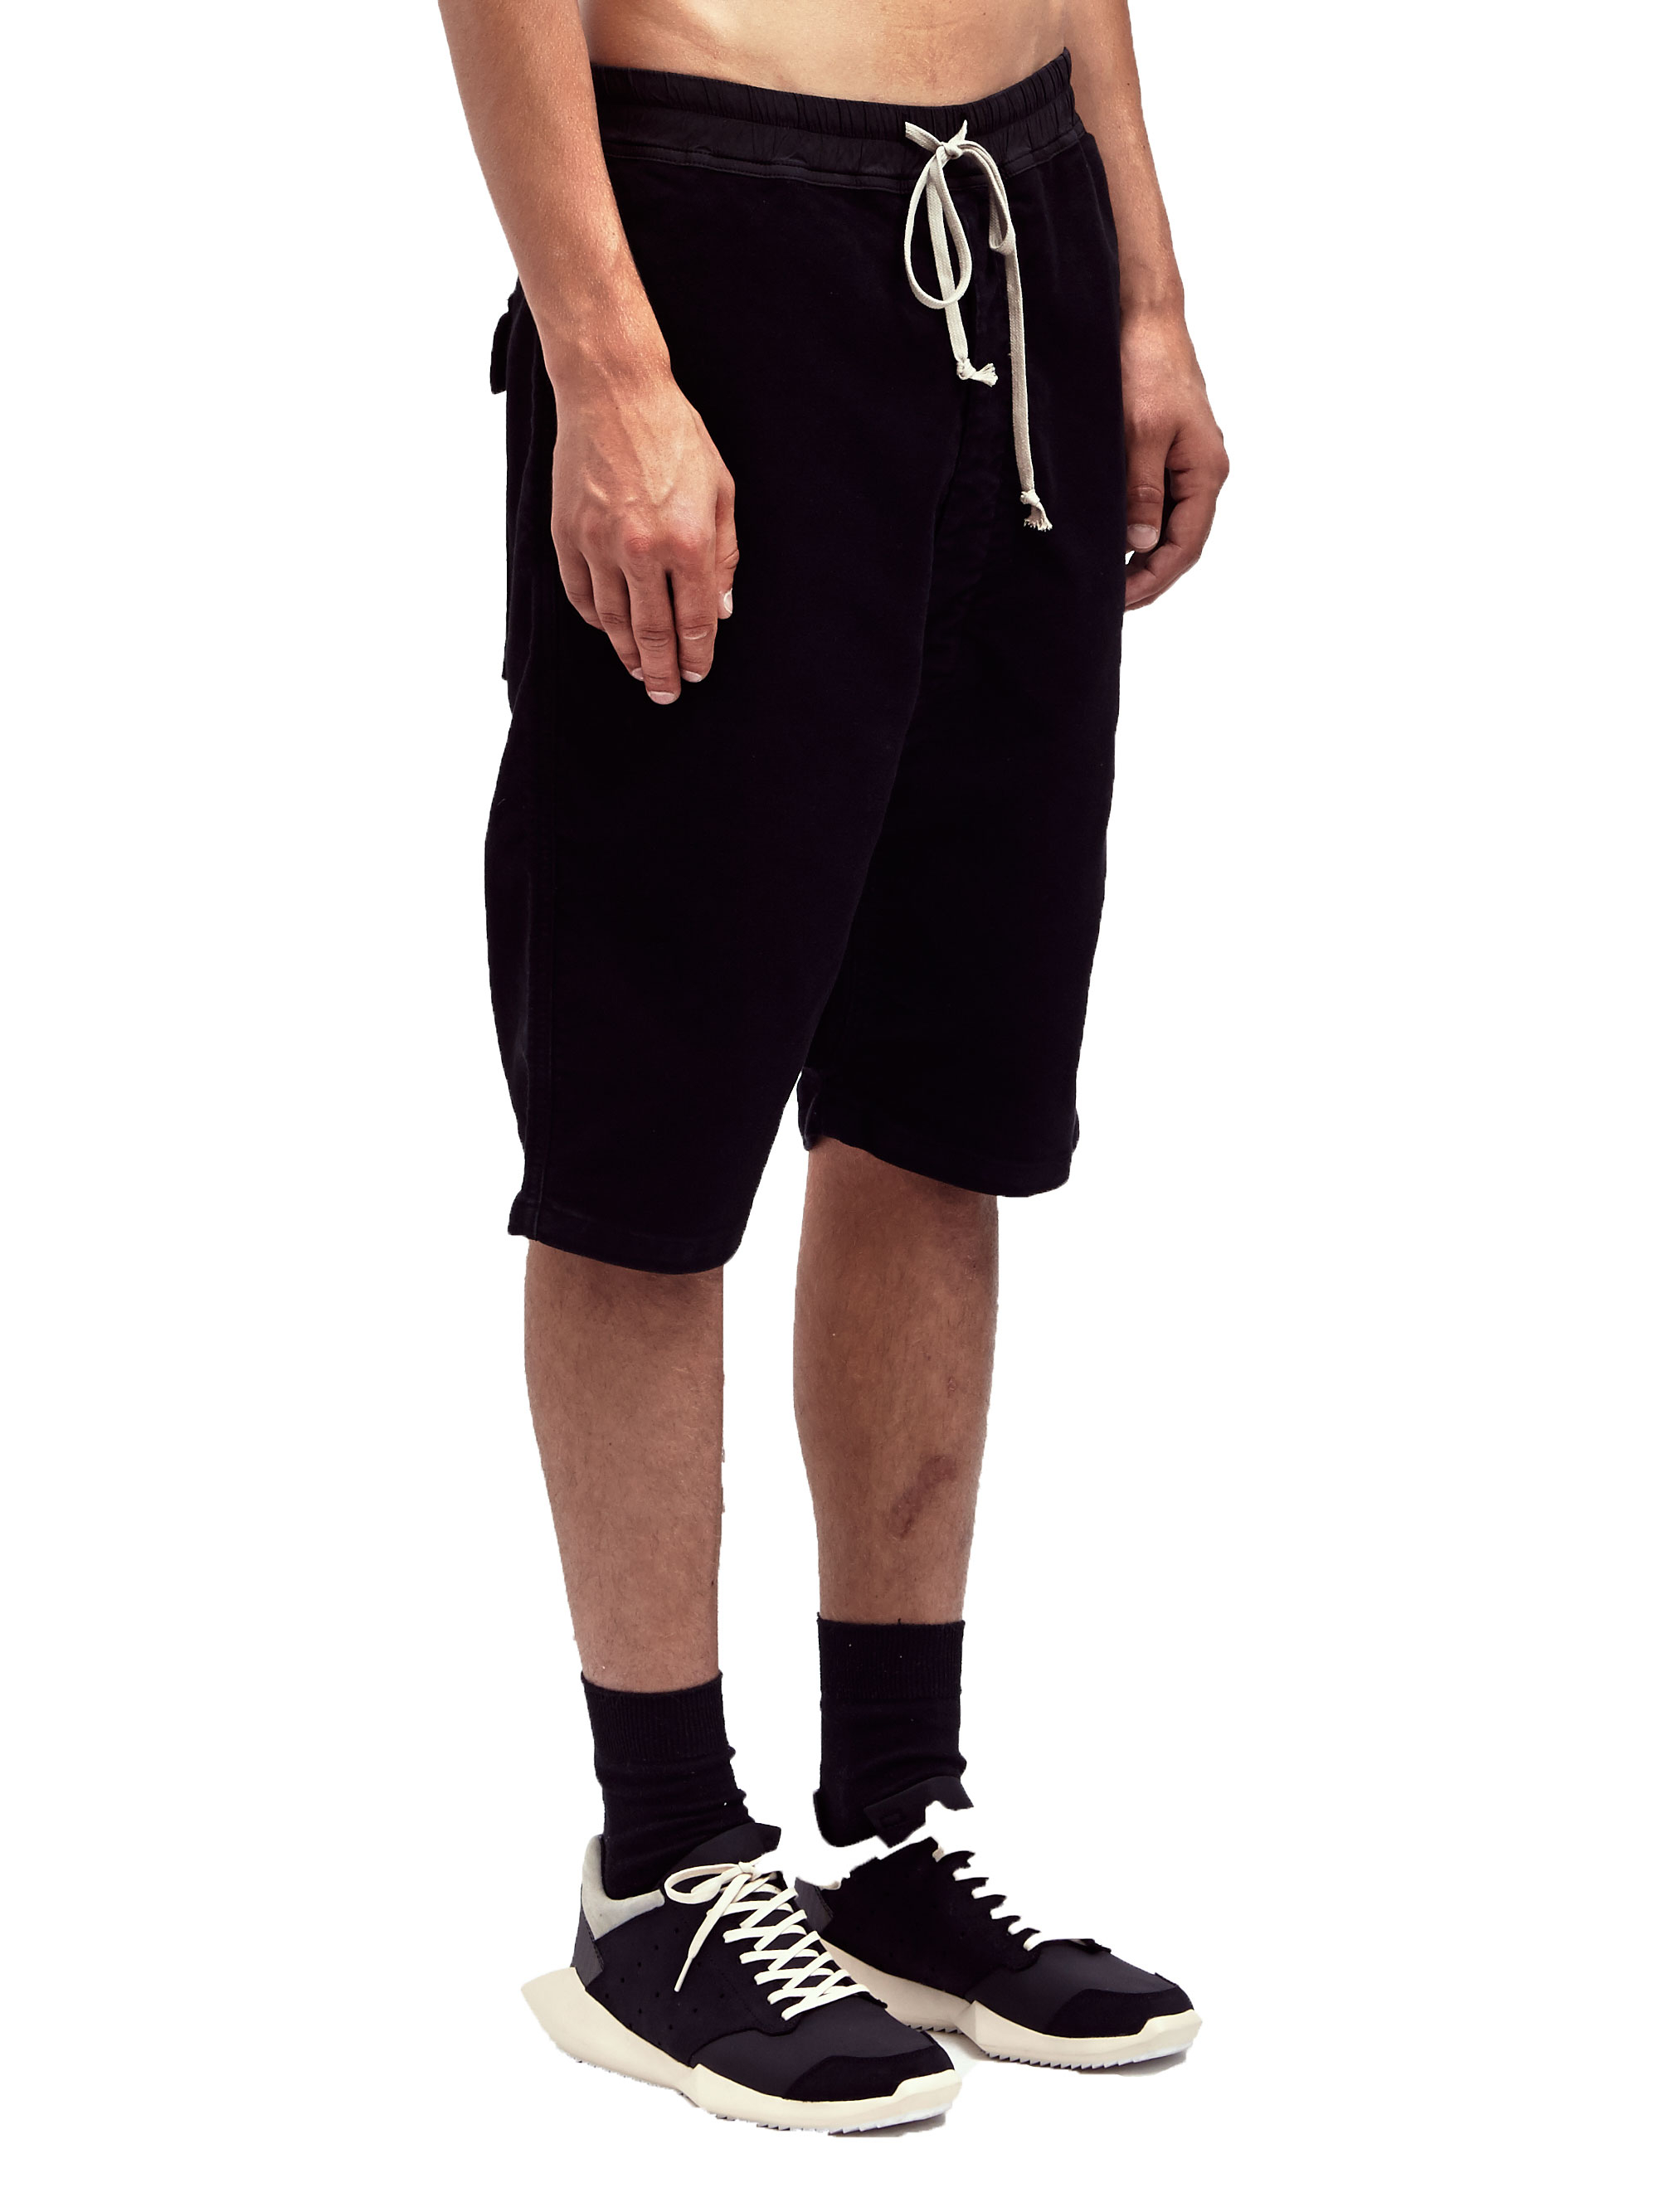 Lyst - Drkshdw By Rick Owens Mens Drawstring Shorts in Black for Men